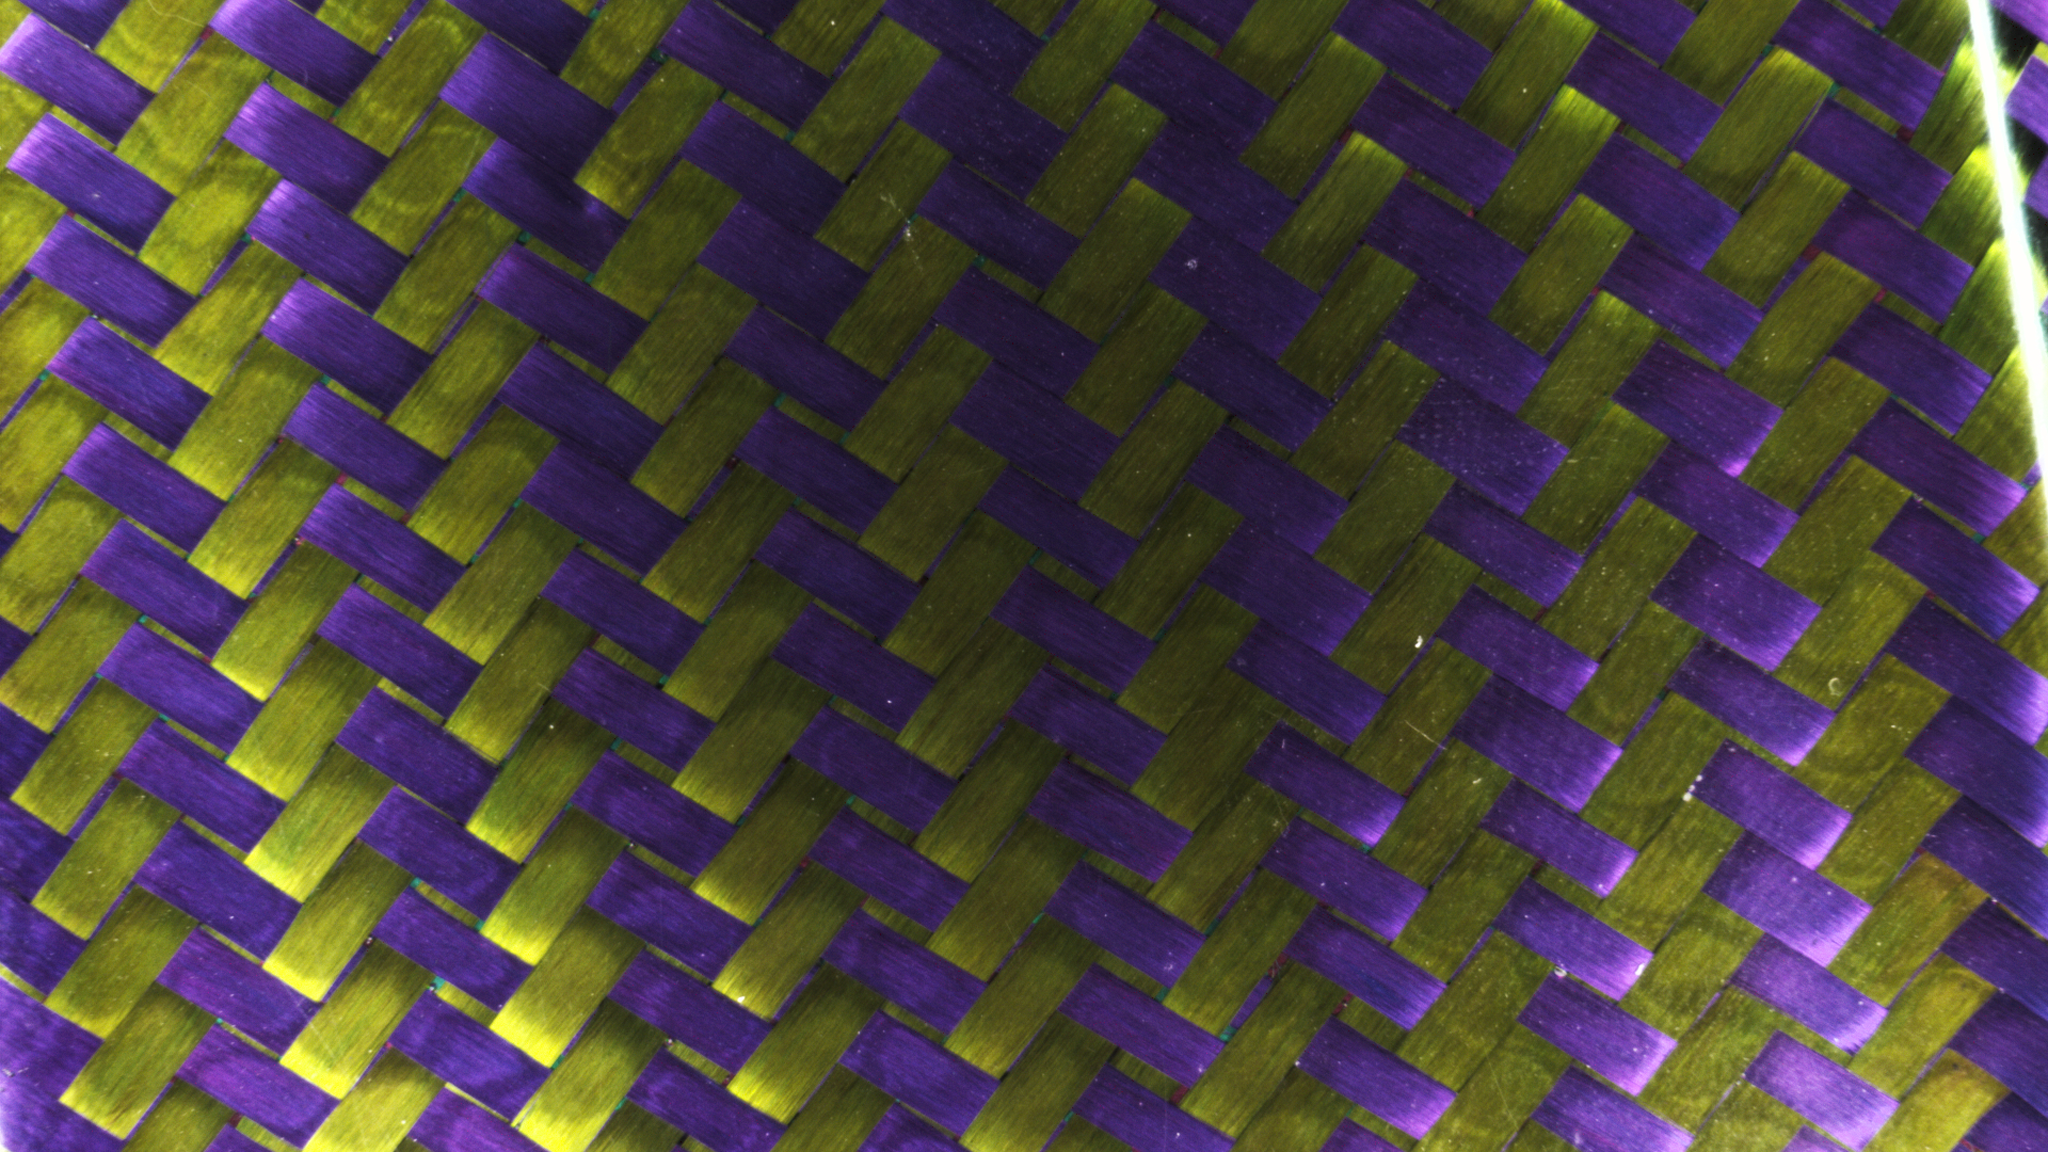 False color polarization image of CFRP fibres